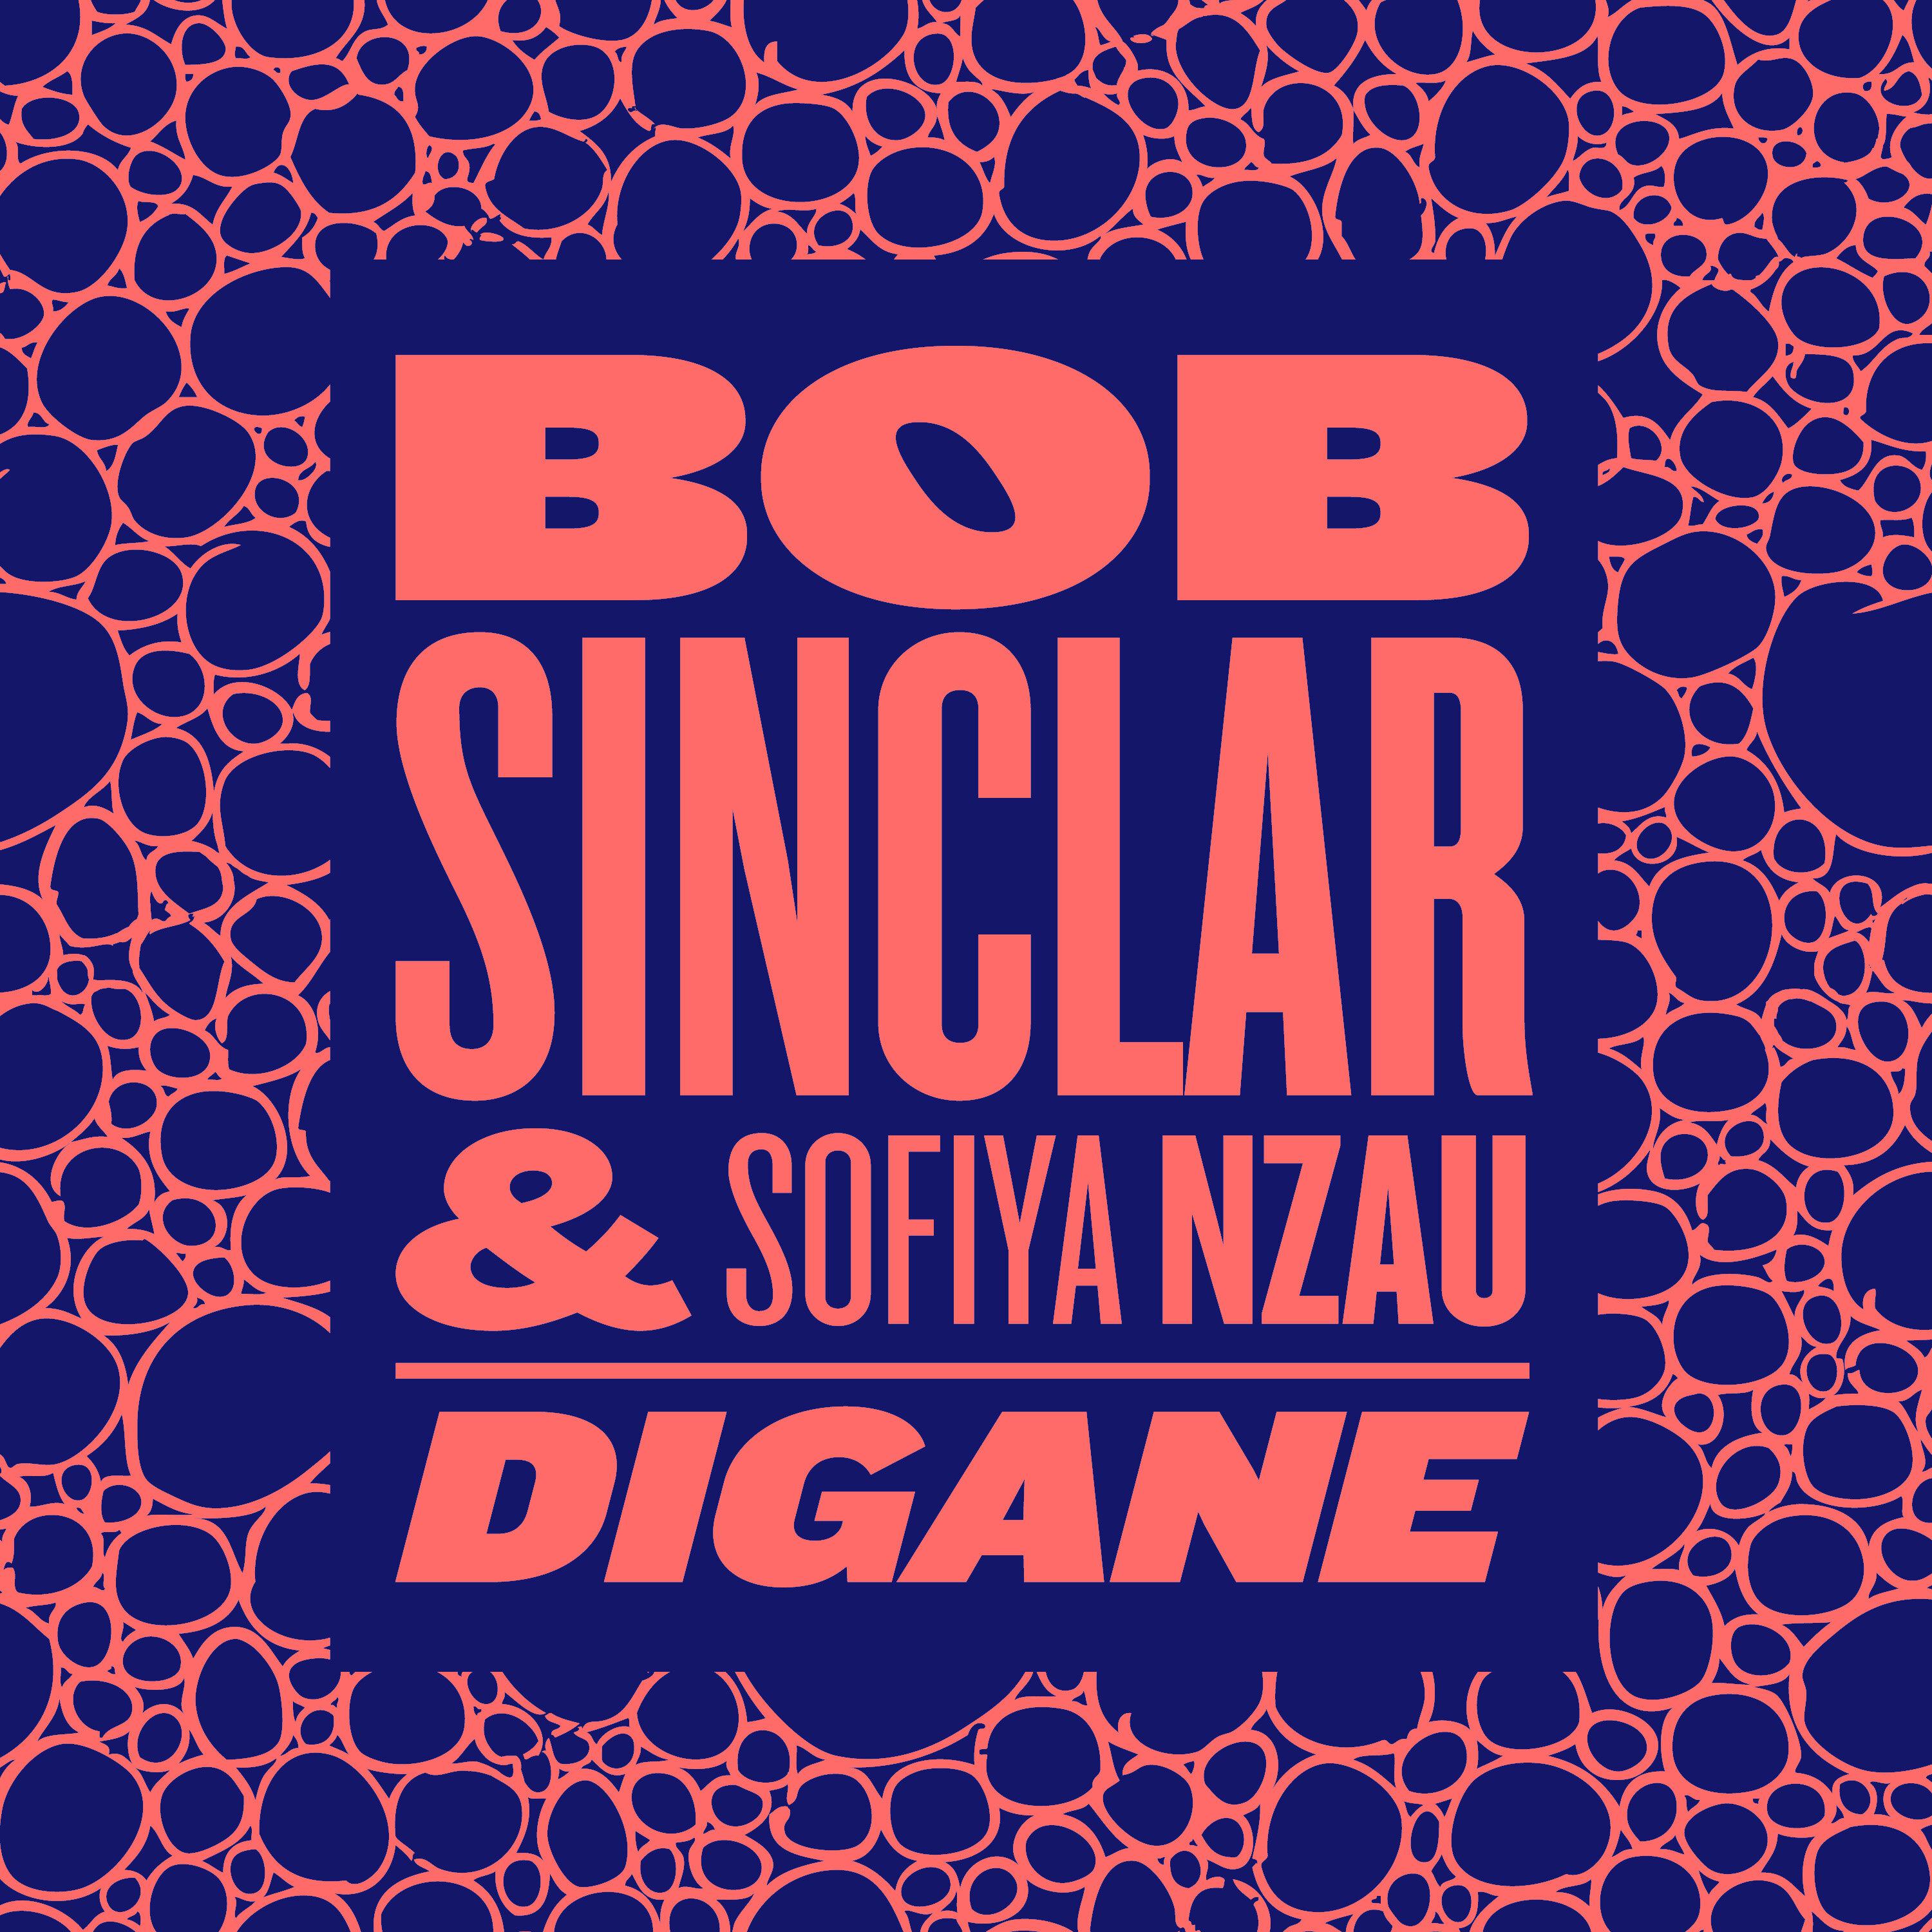 Bob Sinclar - Digane (Extended)